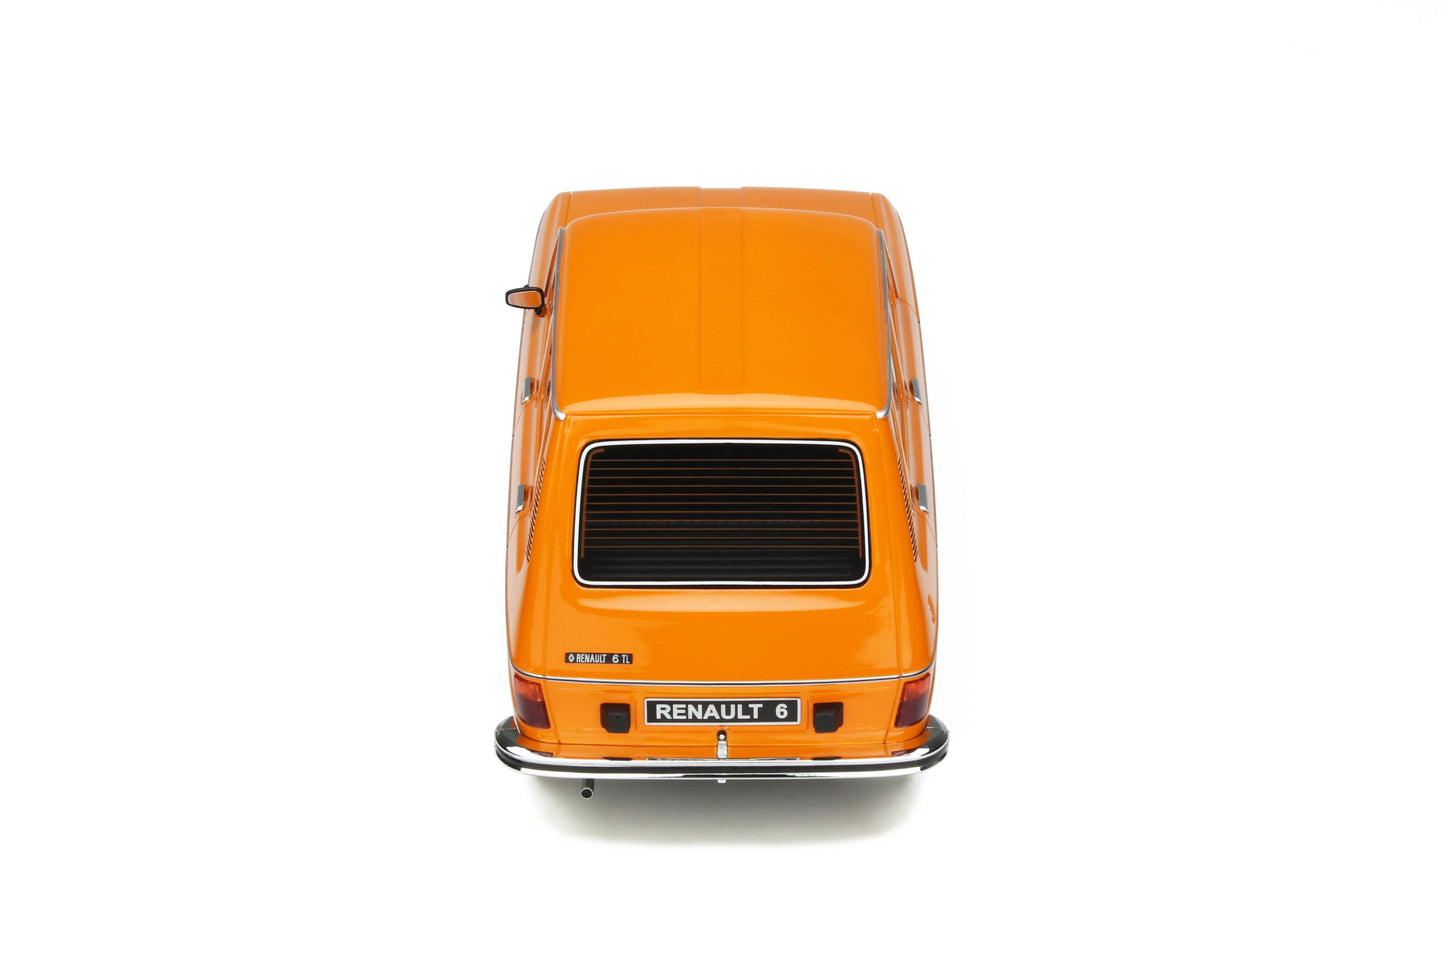 OTTO 1:18 Renault 6 TL Orange OT371